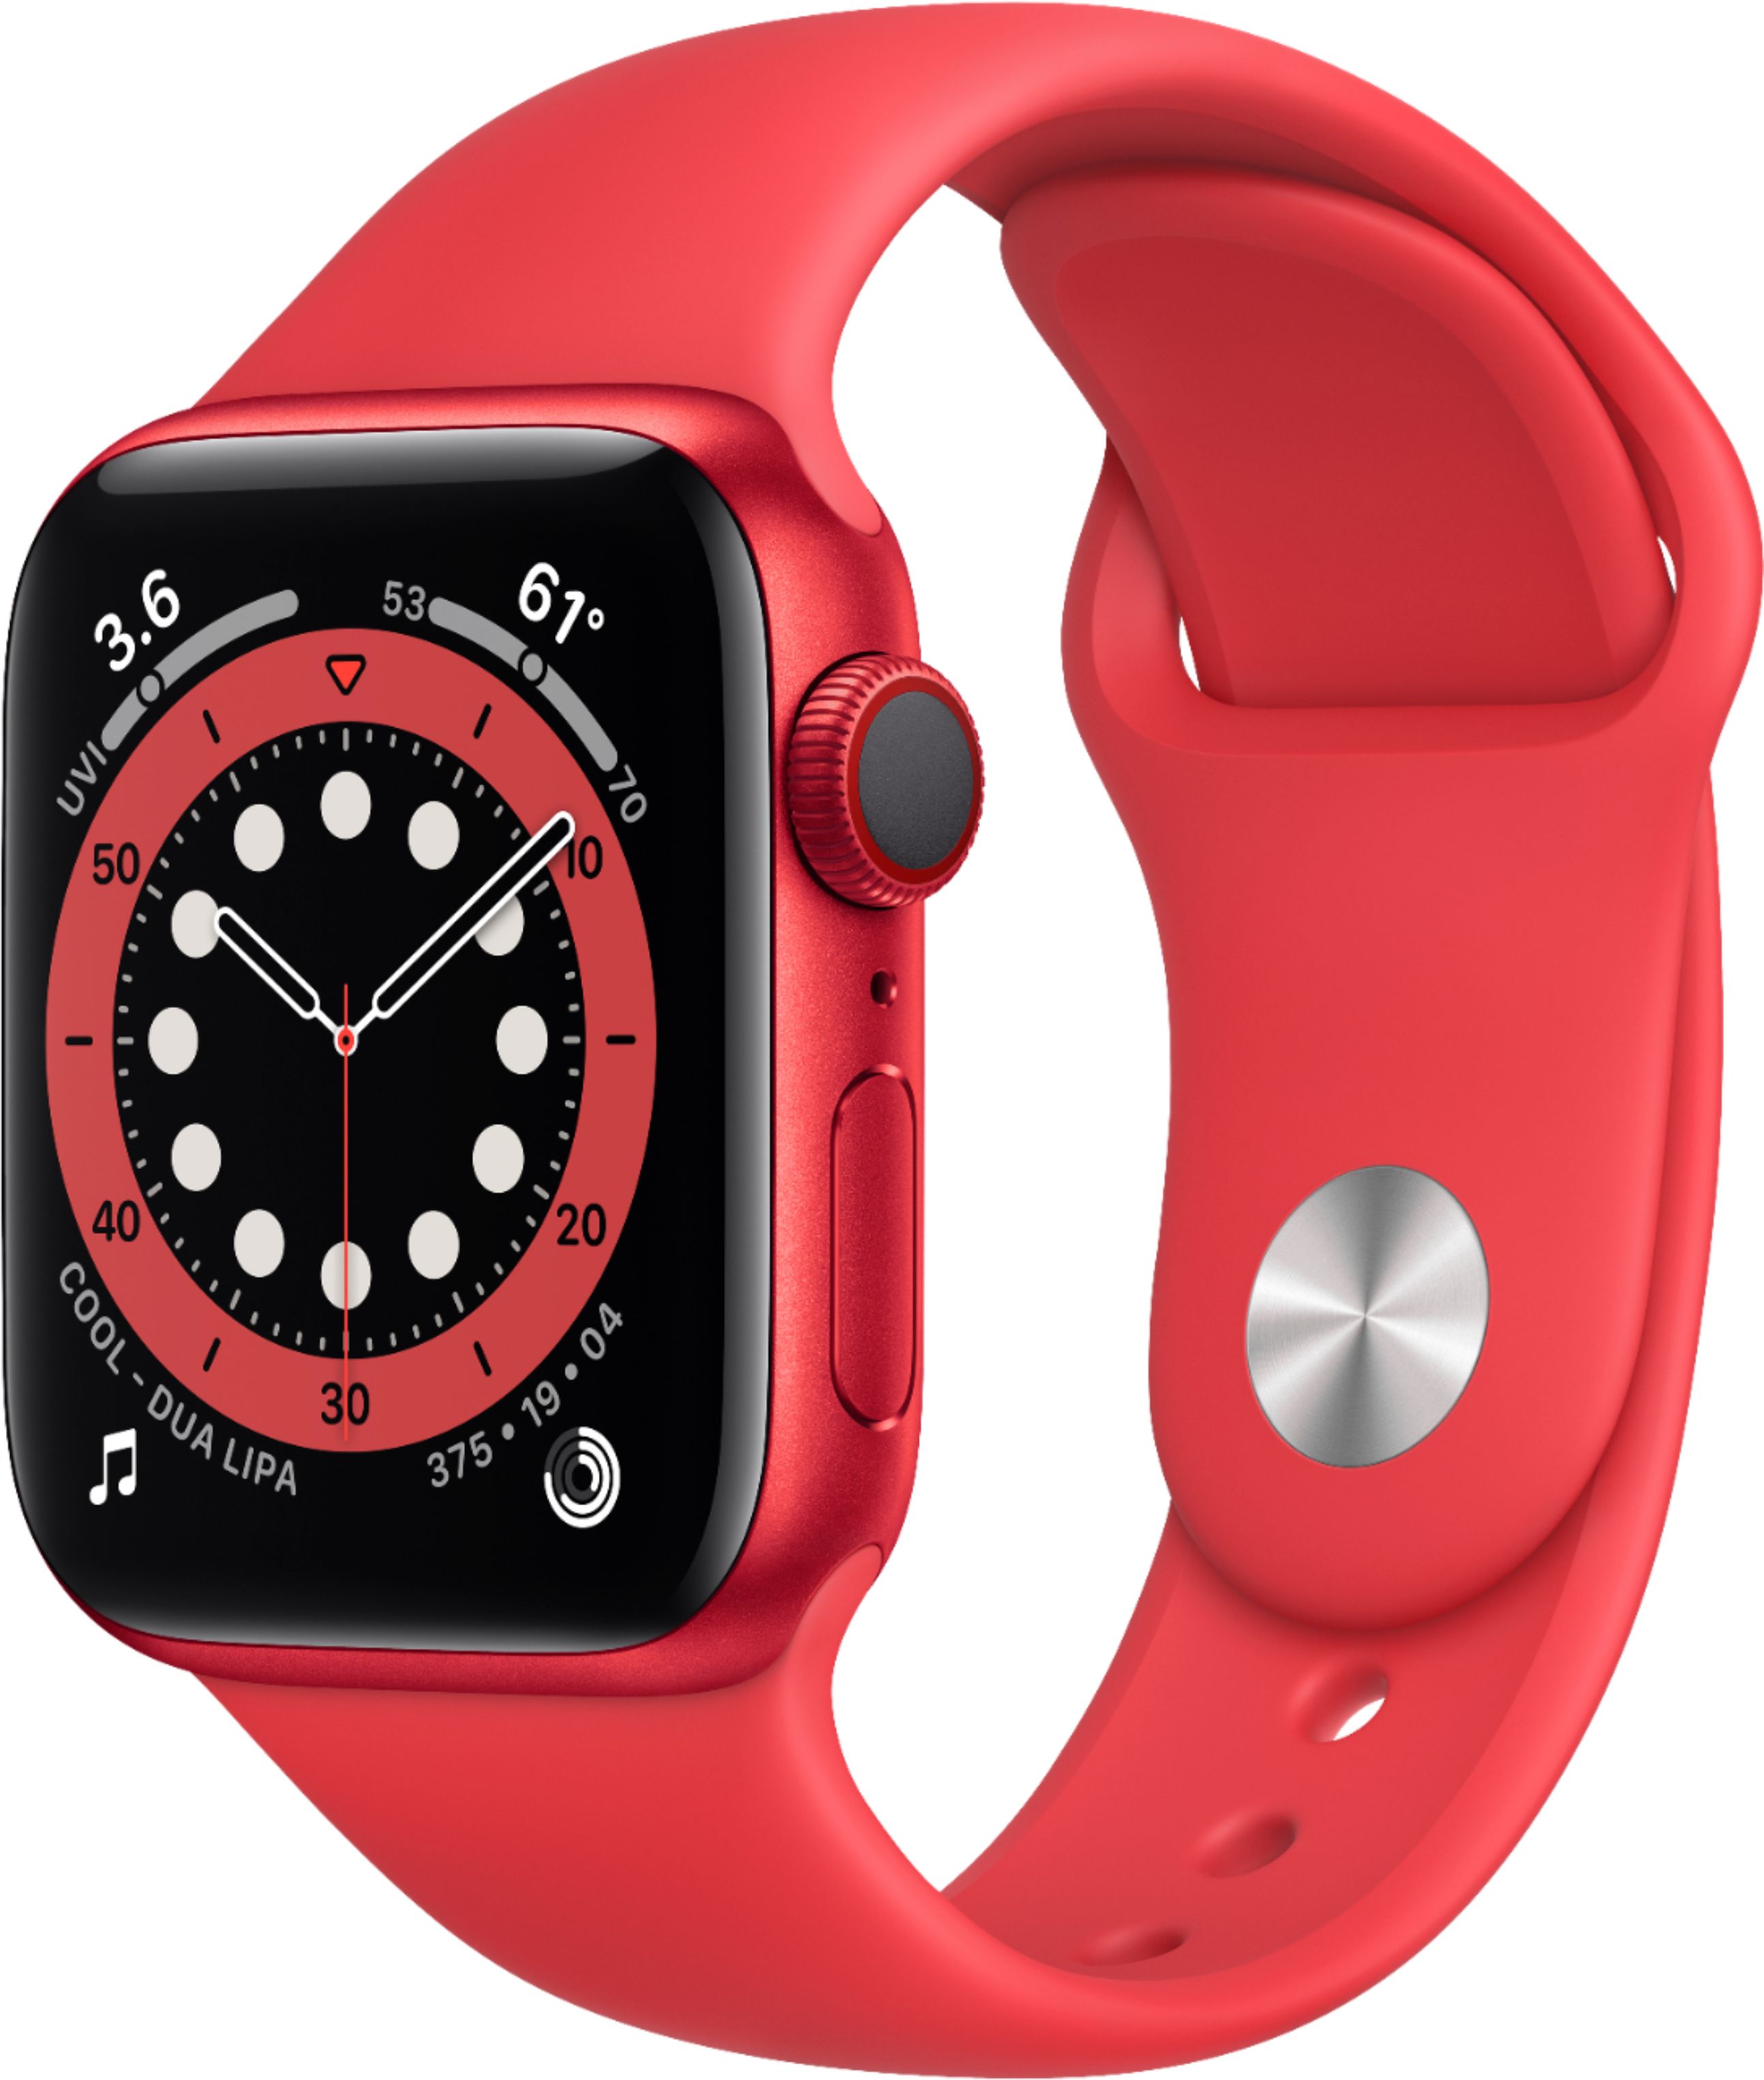 Apple Watch Series 6 (GPS + Cellular) 40mm Aluminum - Best Buy